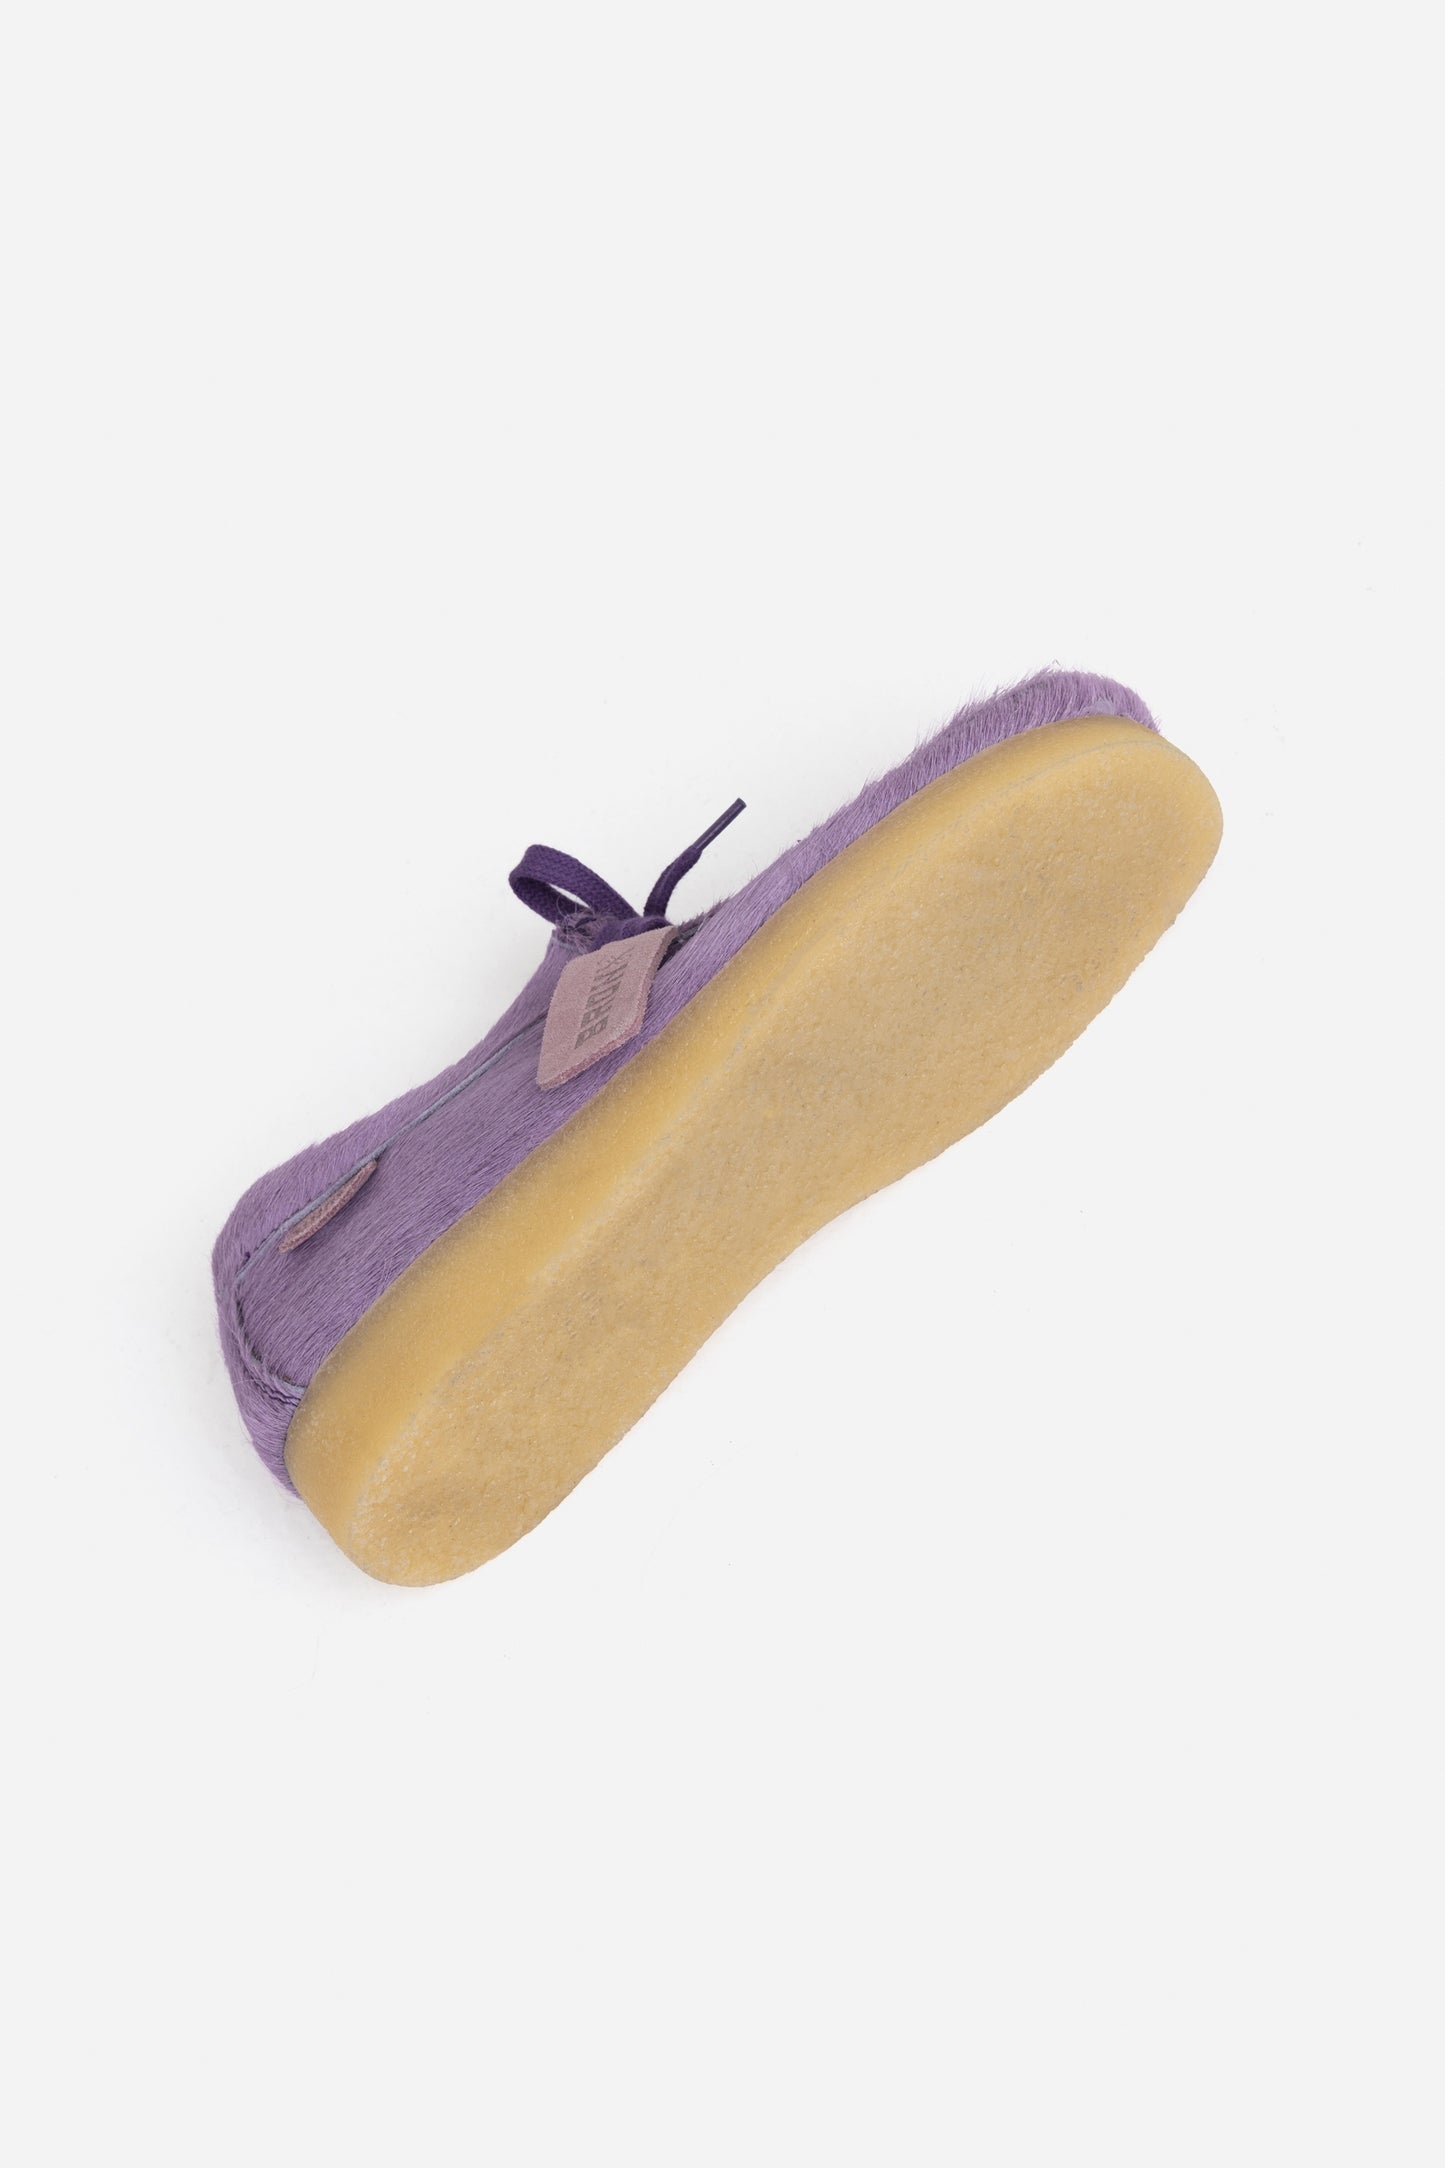 Low Shoe Wonde-ry | cool lilac